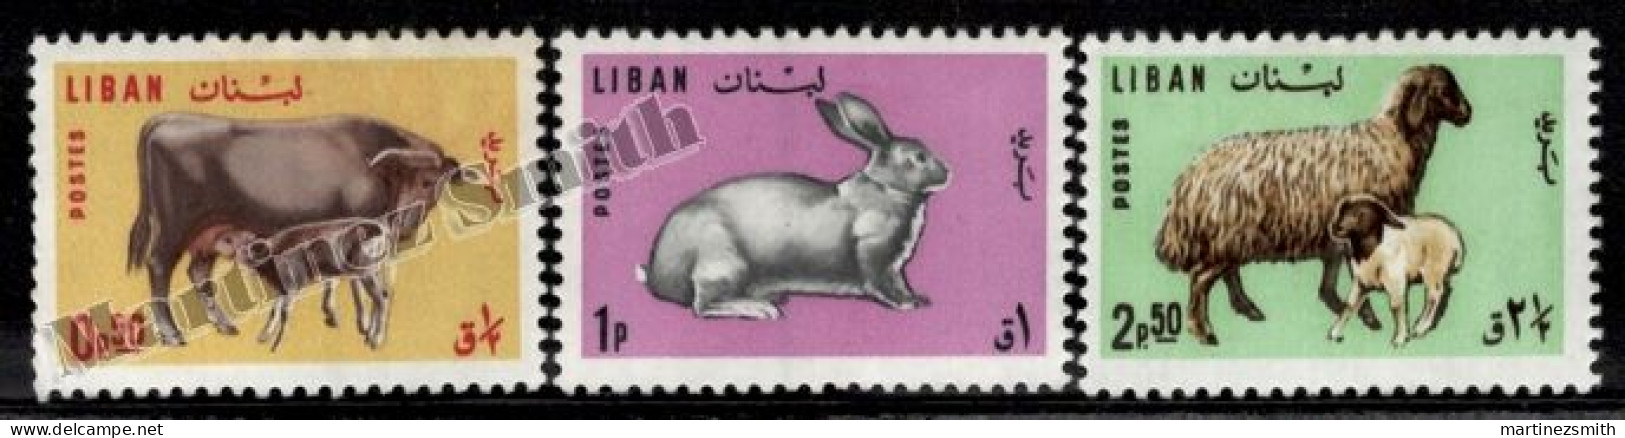 Liban 1965 Yvert 256-58, Fauna, Livestock, Farm Animals  - MNH - Libanon